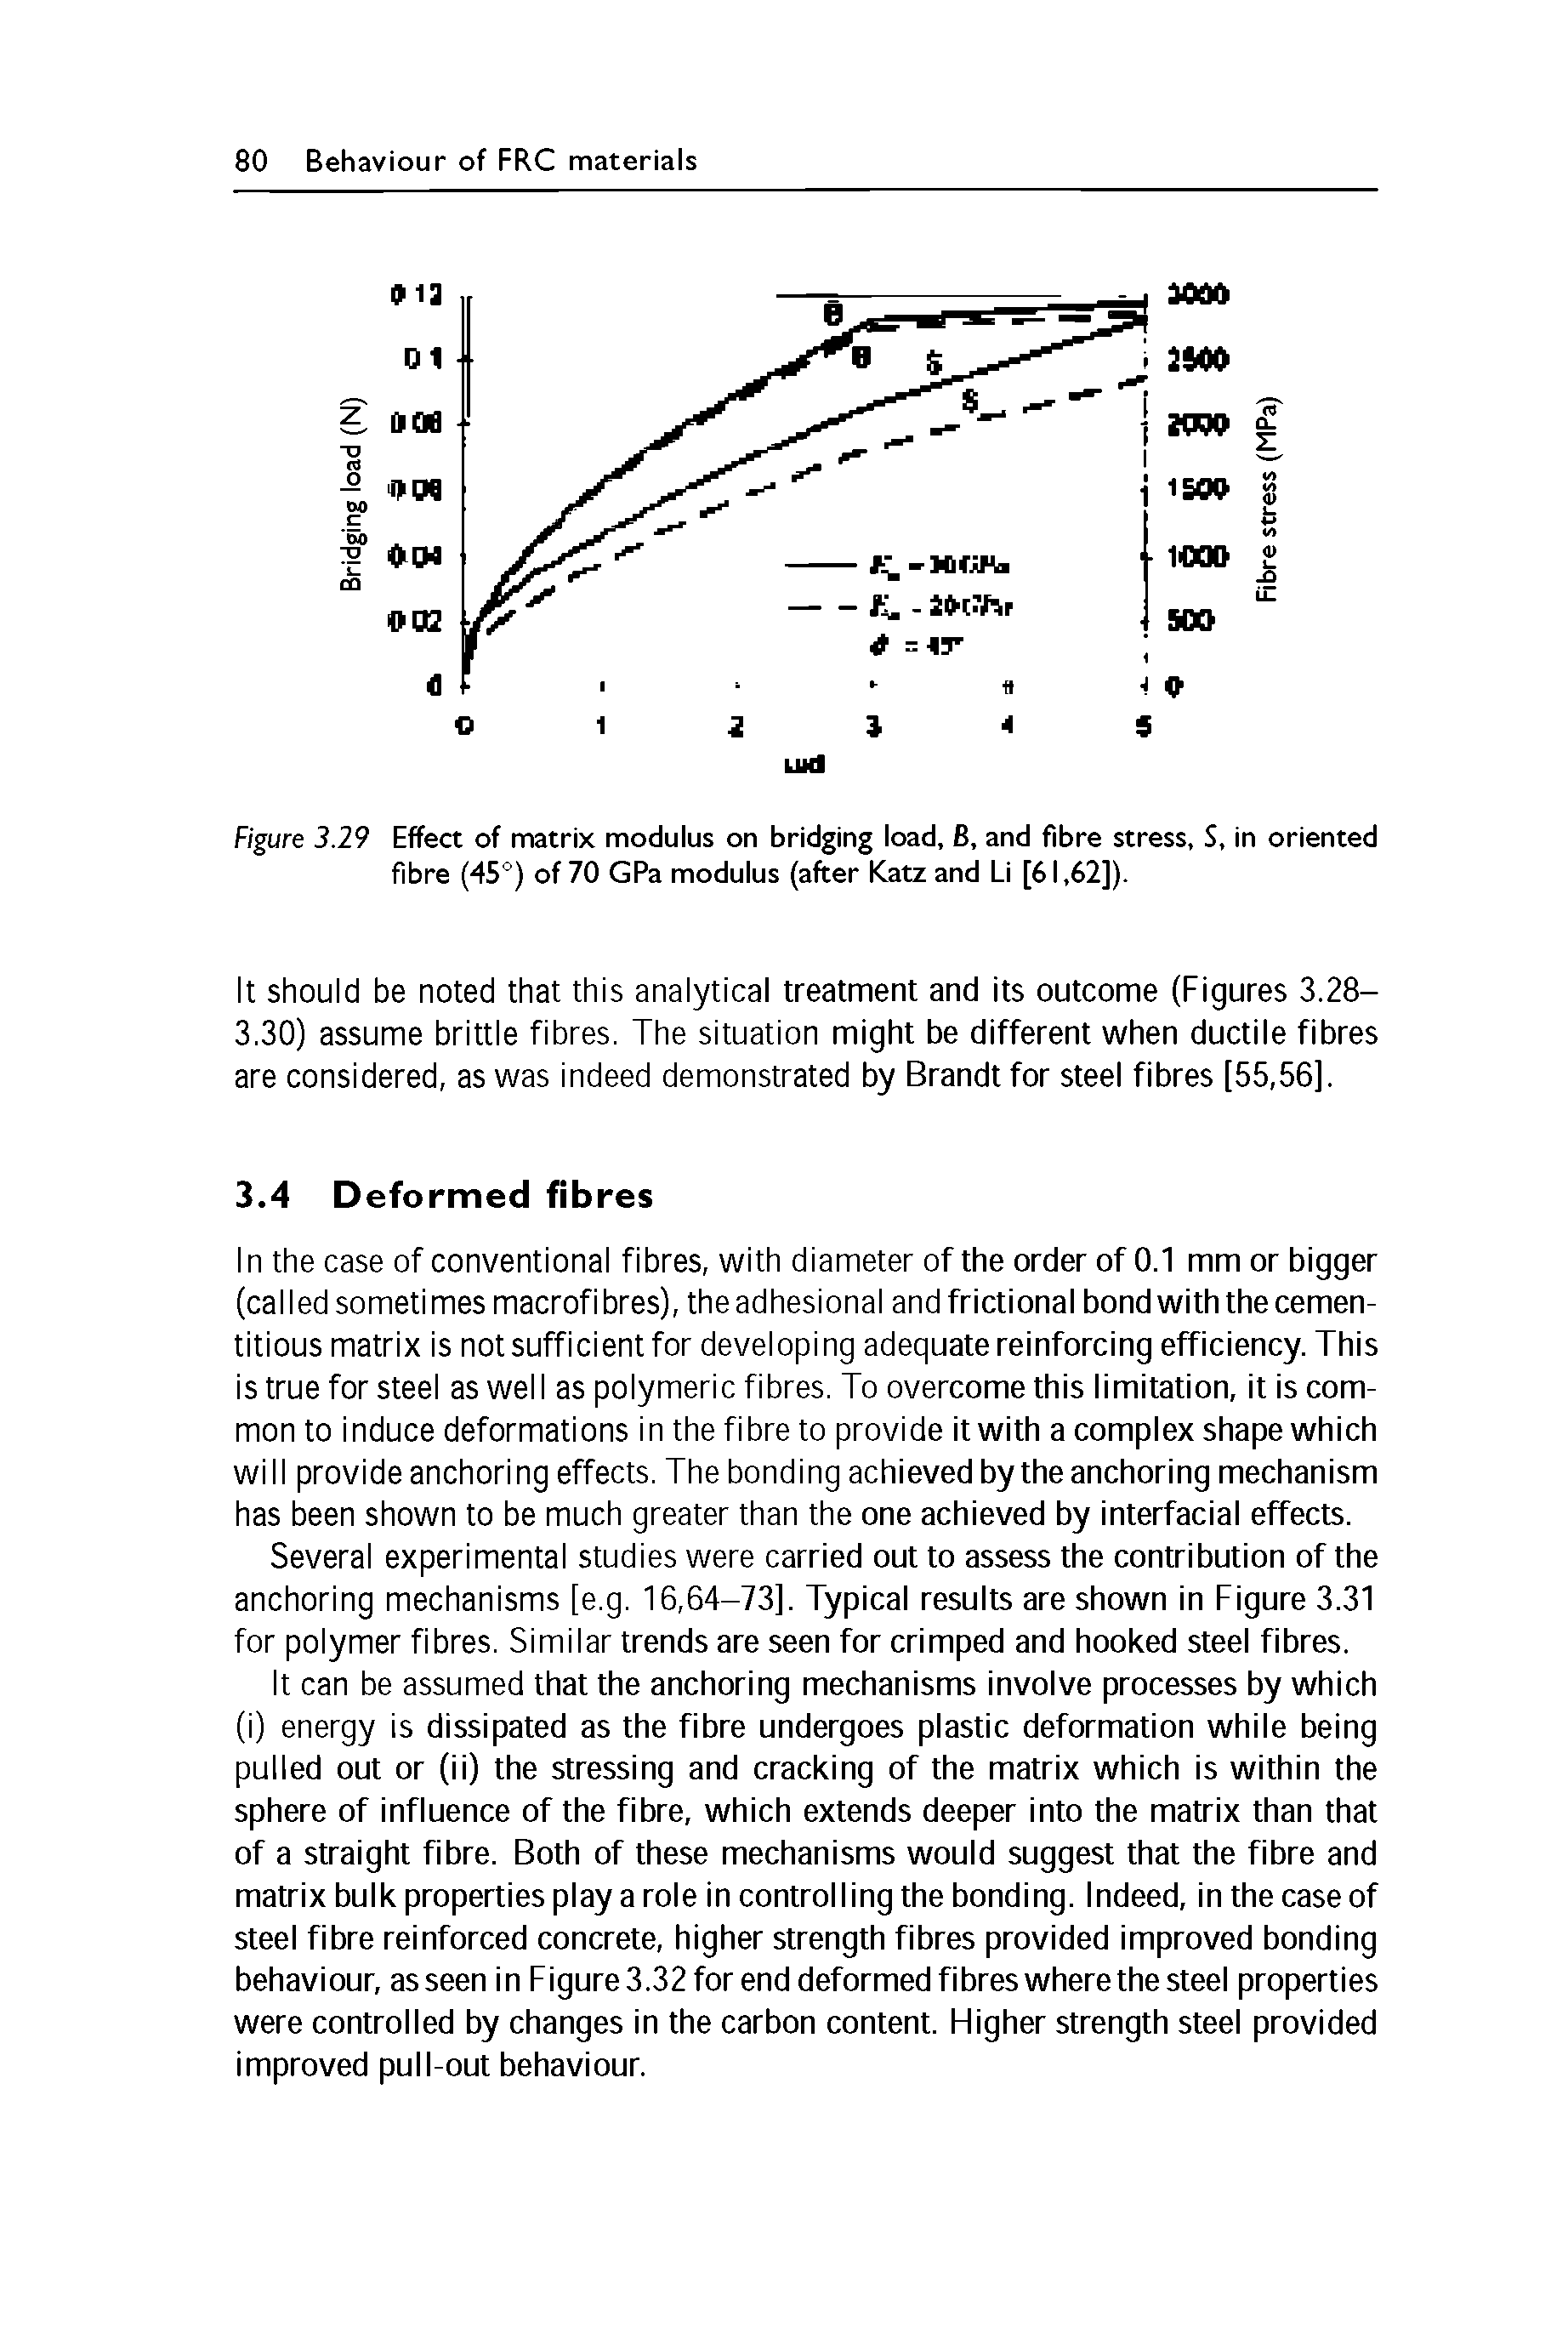 Figure 3.29 Effect of matrix modulus on bridging load, 6, and fibre stress, S, in oriented fibre (45°) of 70 GPa modulus (after Katz and Li [61,62]).